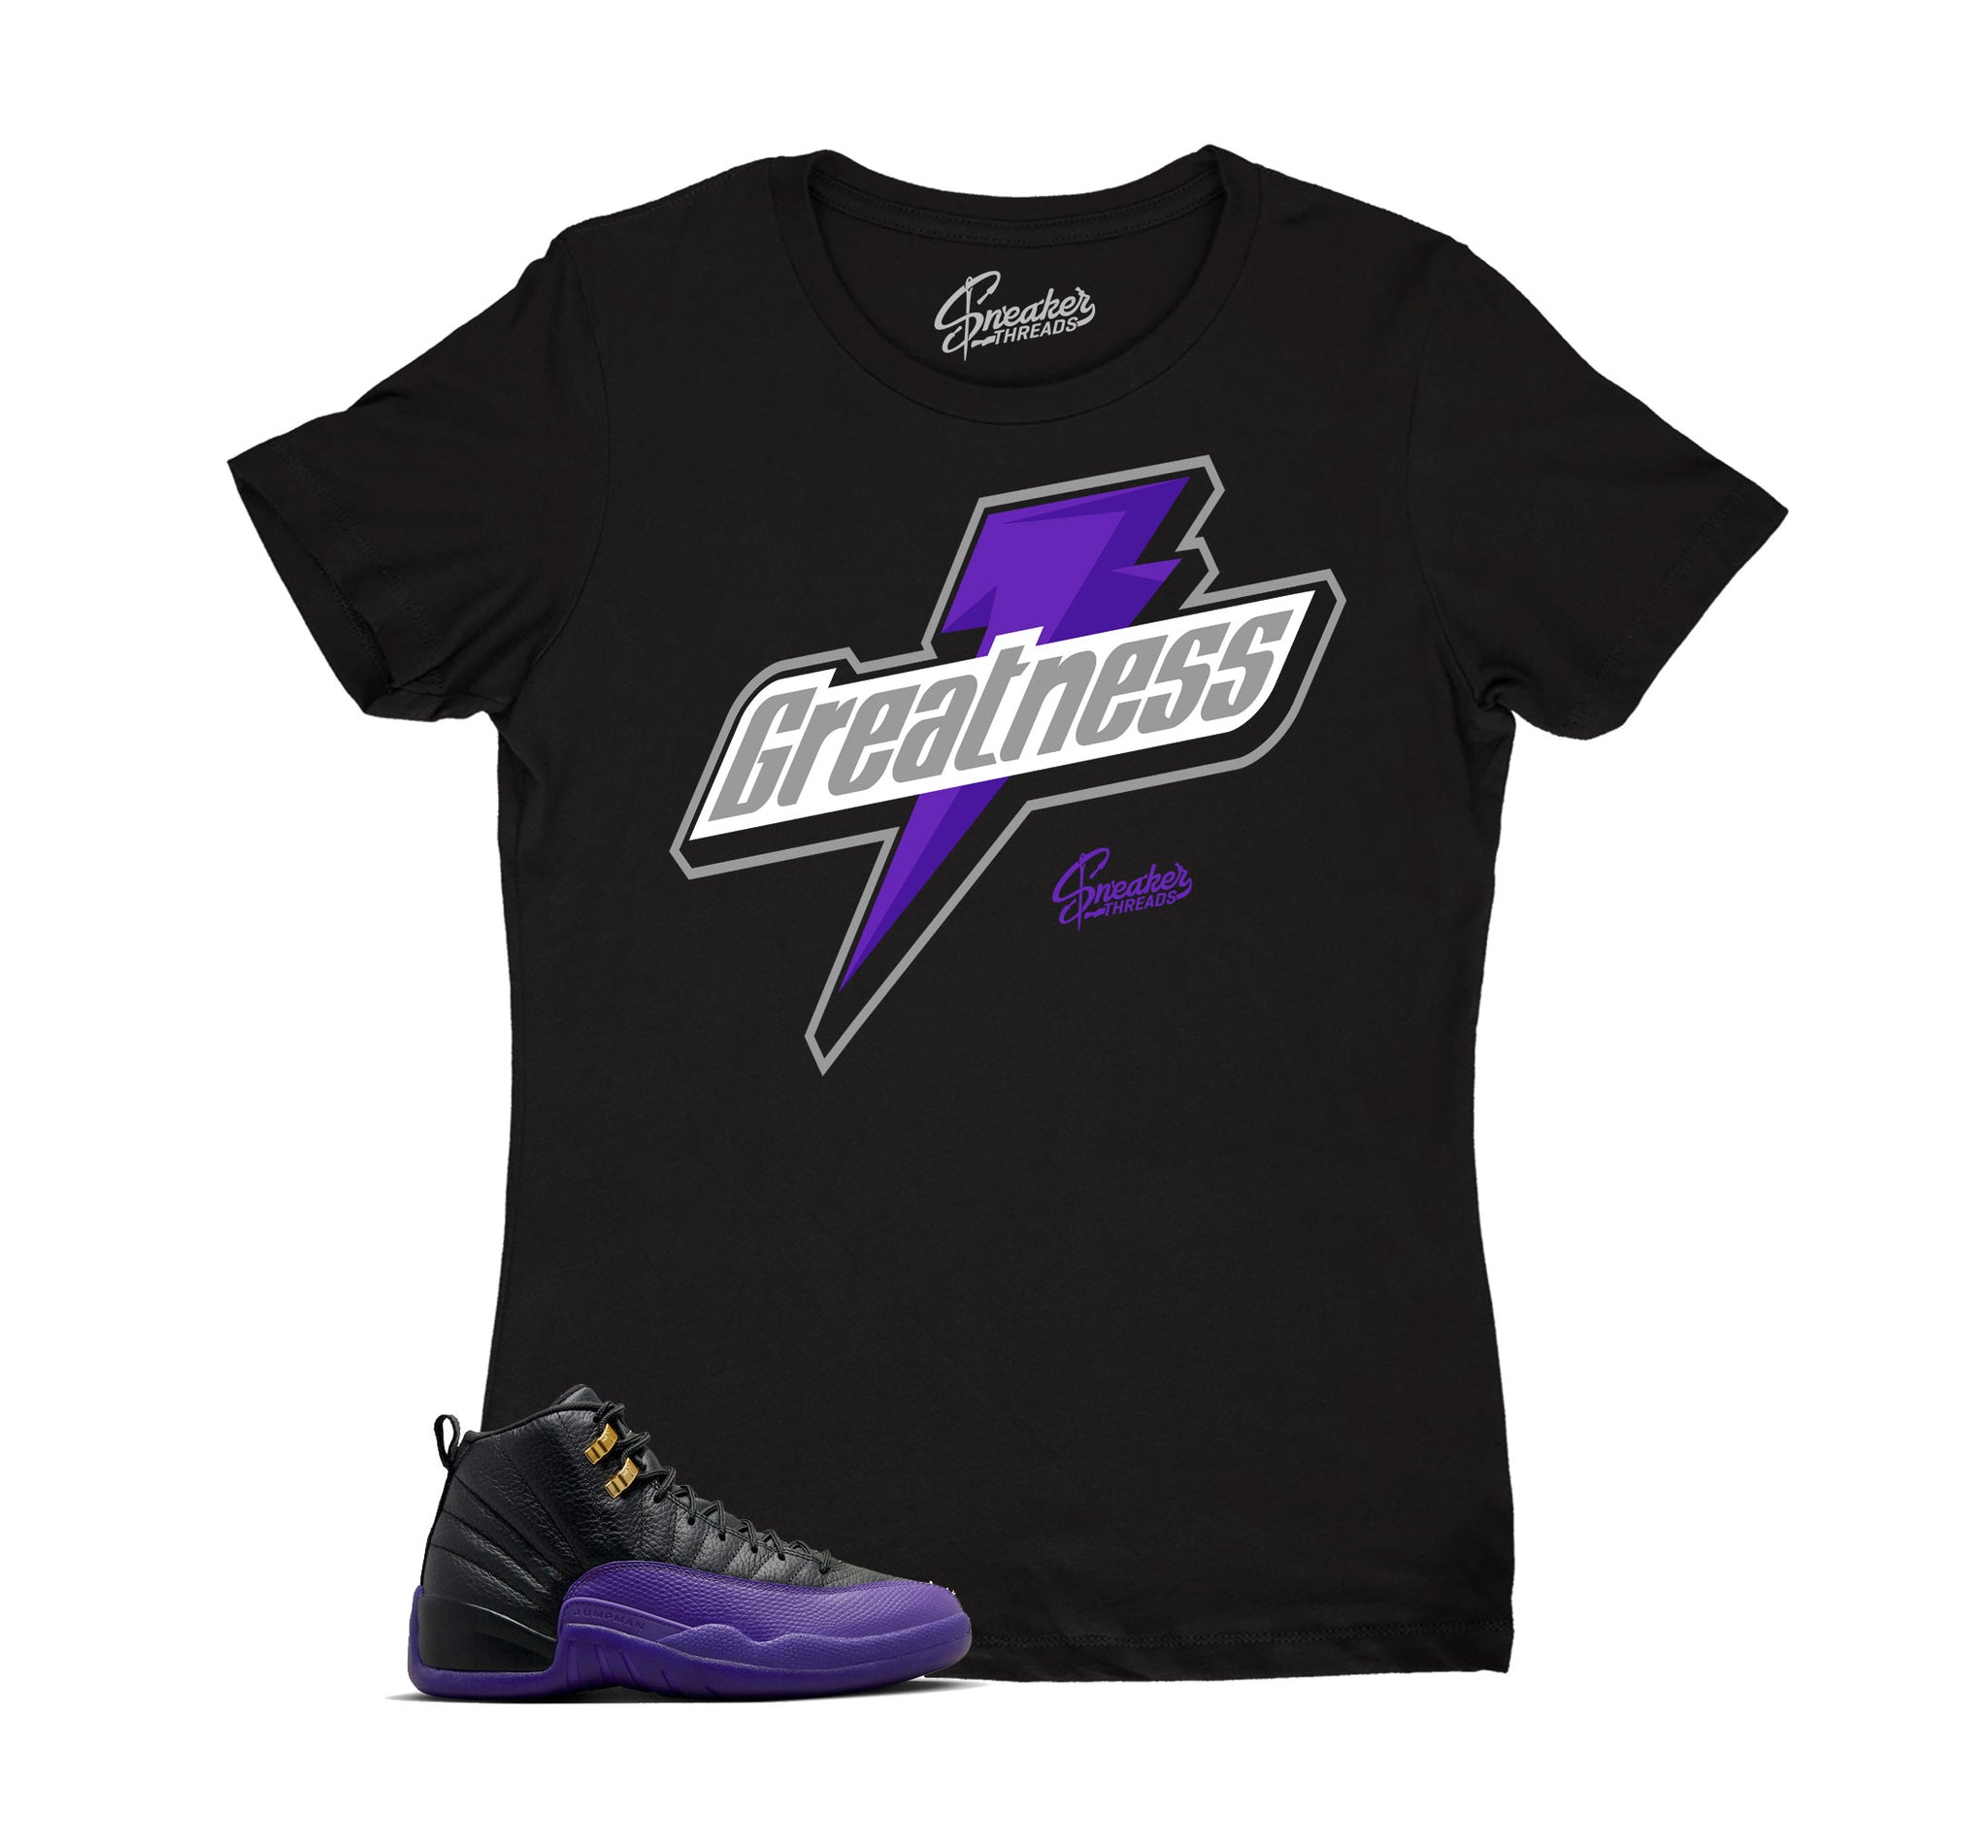 Womens Field Purple 12 Shirt - Greatness - Black